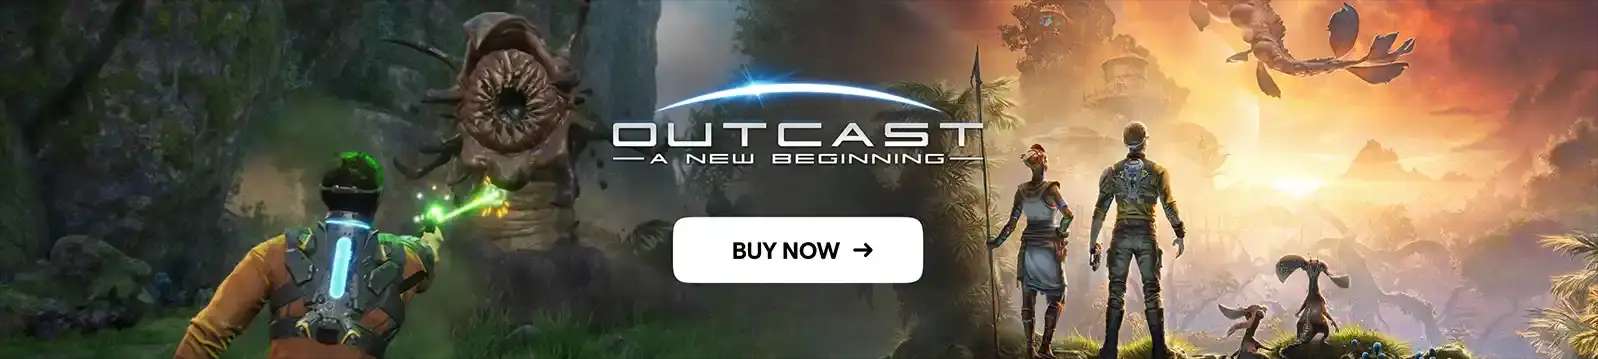 Outcast a new beginning